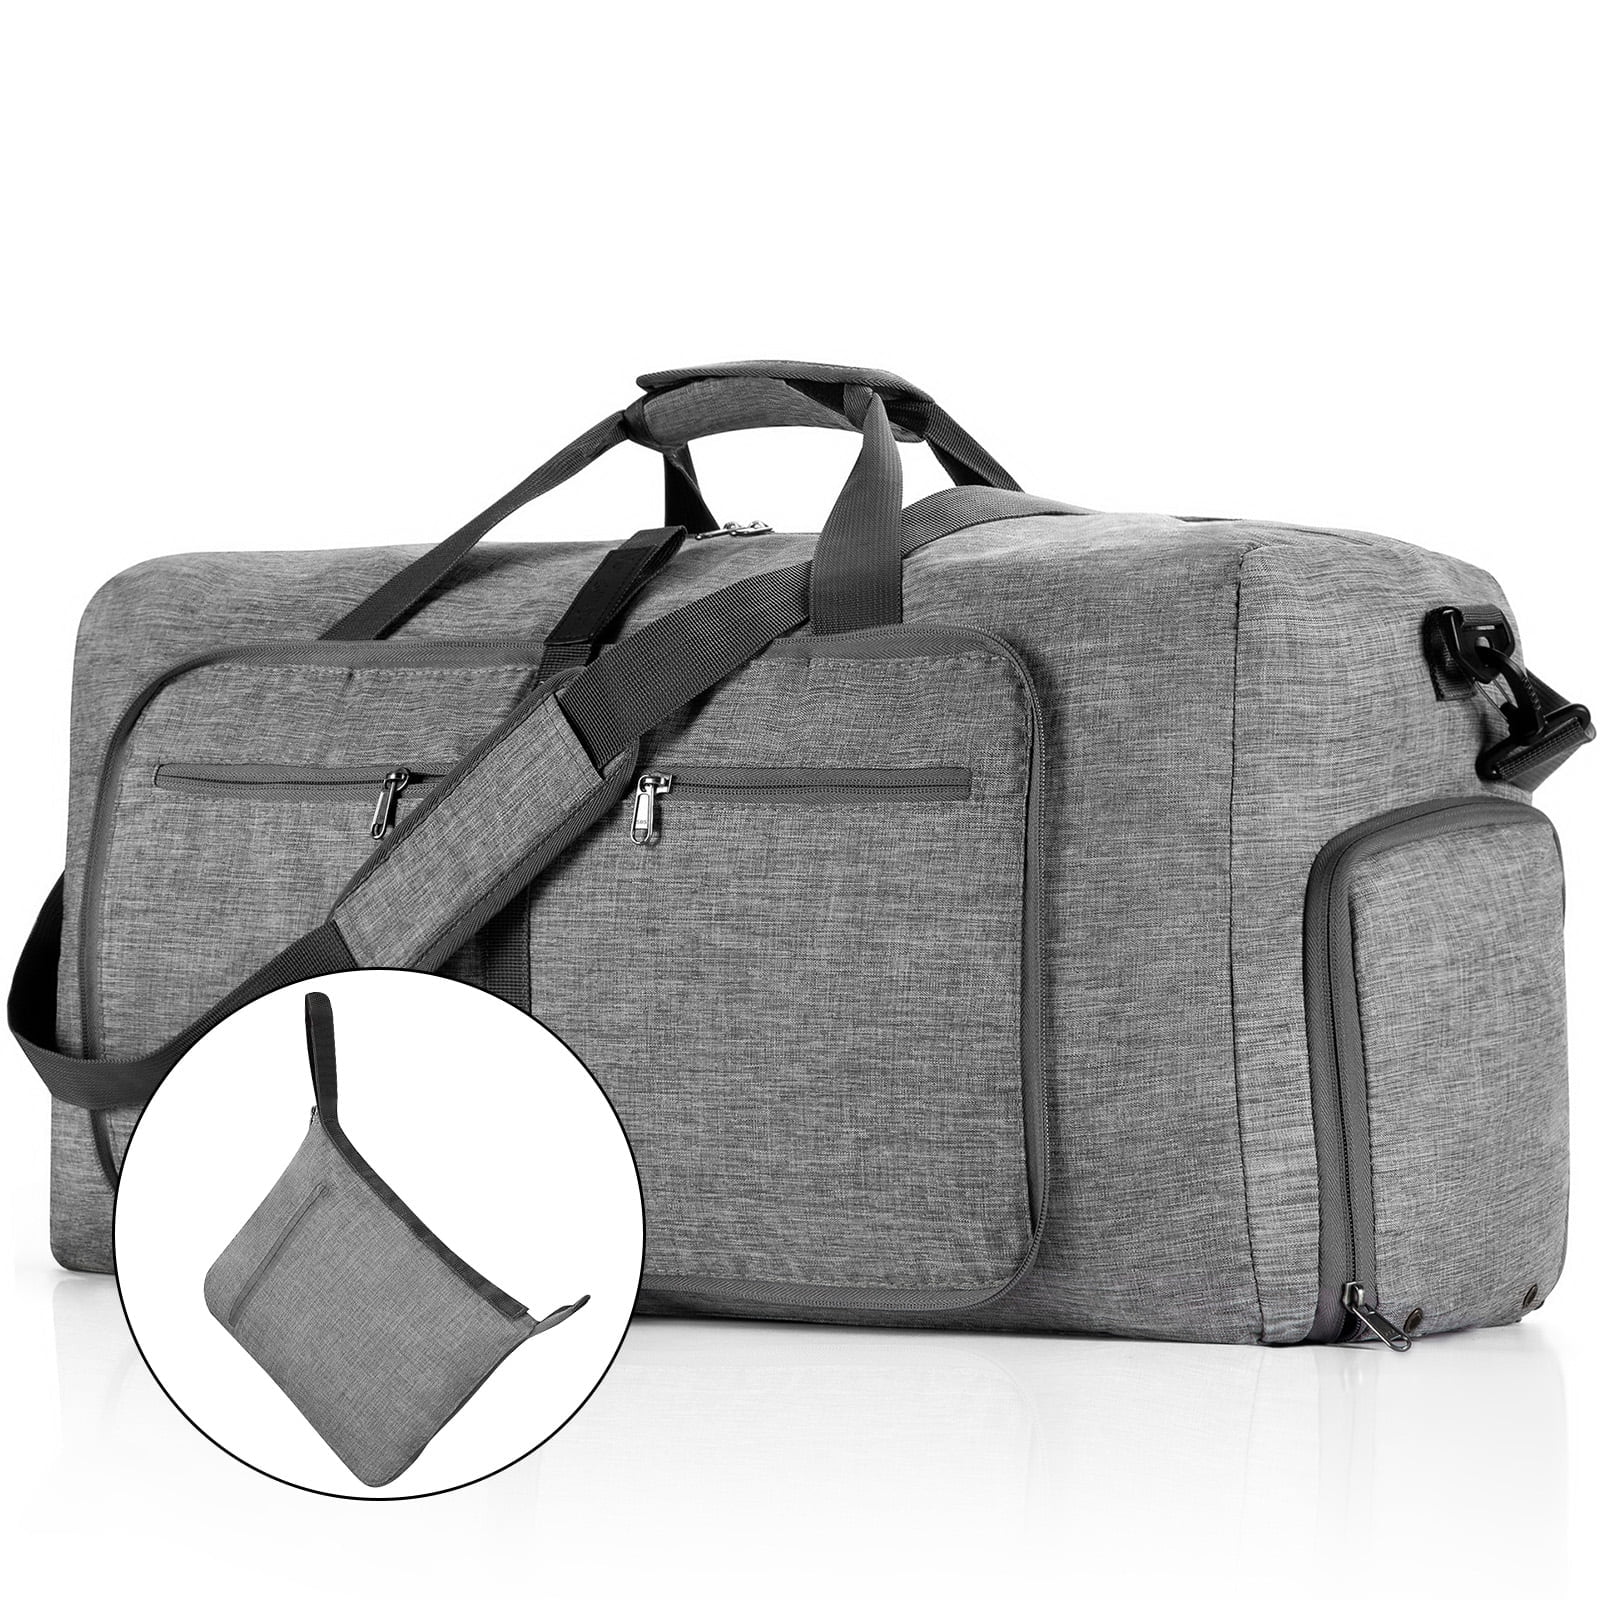 Skearow Checkered Duffle Bag,21L Large Capacity Luggage Bag,PU Vegan  Leather Overnight Bag,Travel Weekender Satchel Shoulder Bag Black Floral  Large Size:20.87x10.24x11.02 